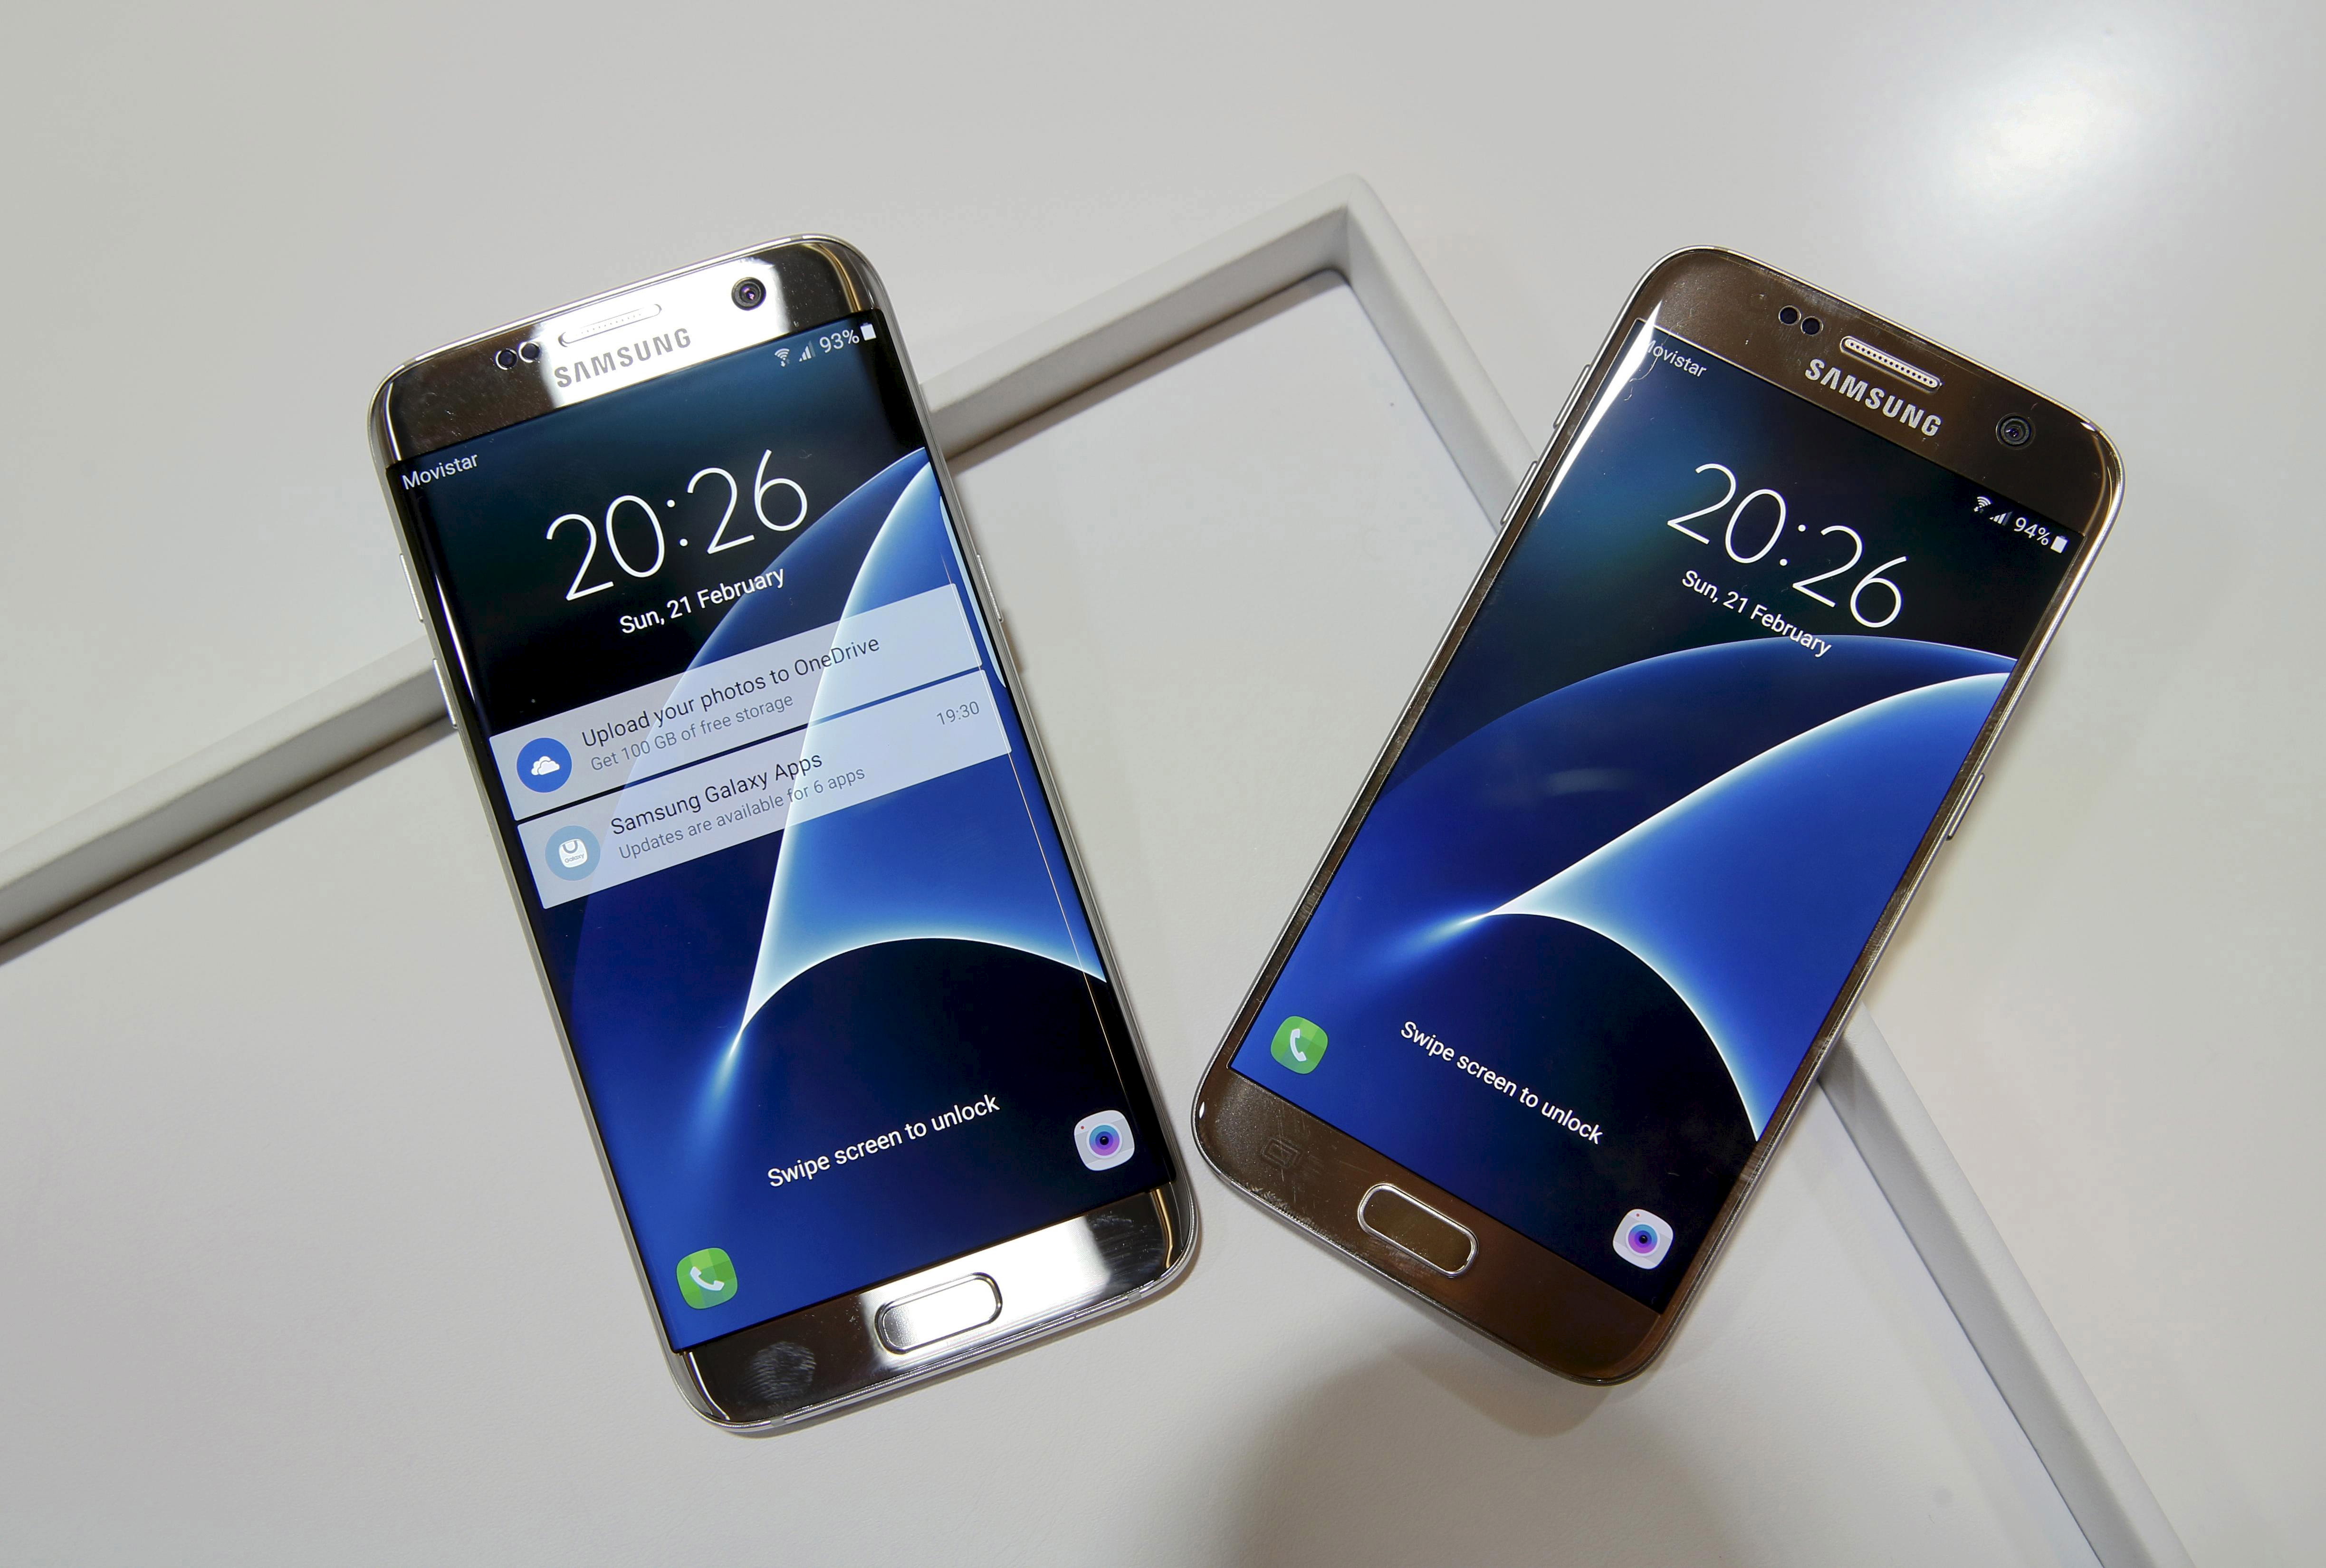 Samsung unveiled at Mobile World Congress - CBS News